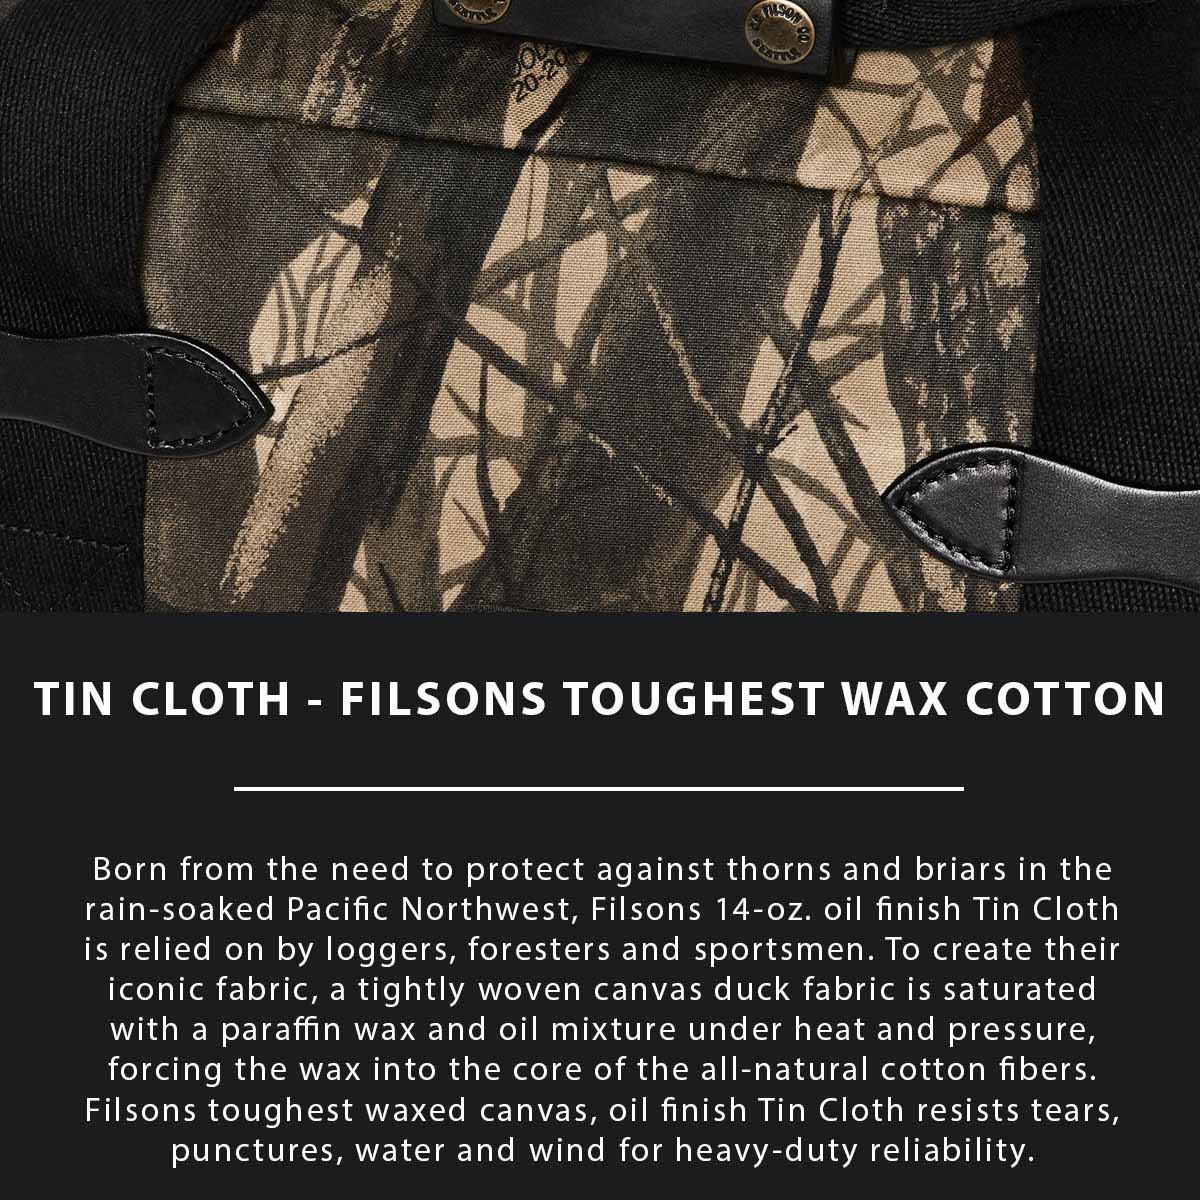 Filson Tin Cloth Small Duffle Bag Realtree Hardwoods Camo, Tin Cloth Erklärt